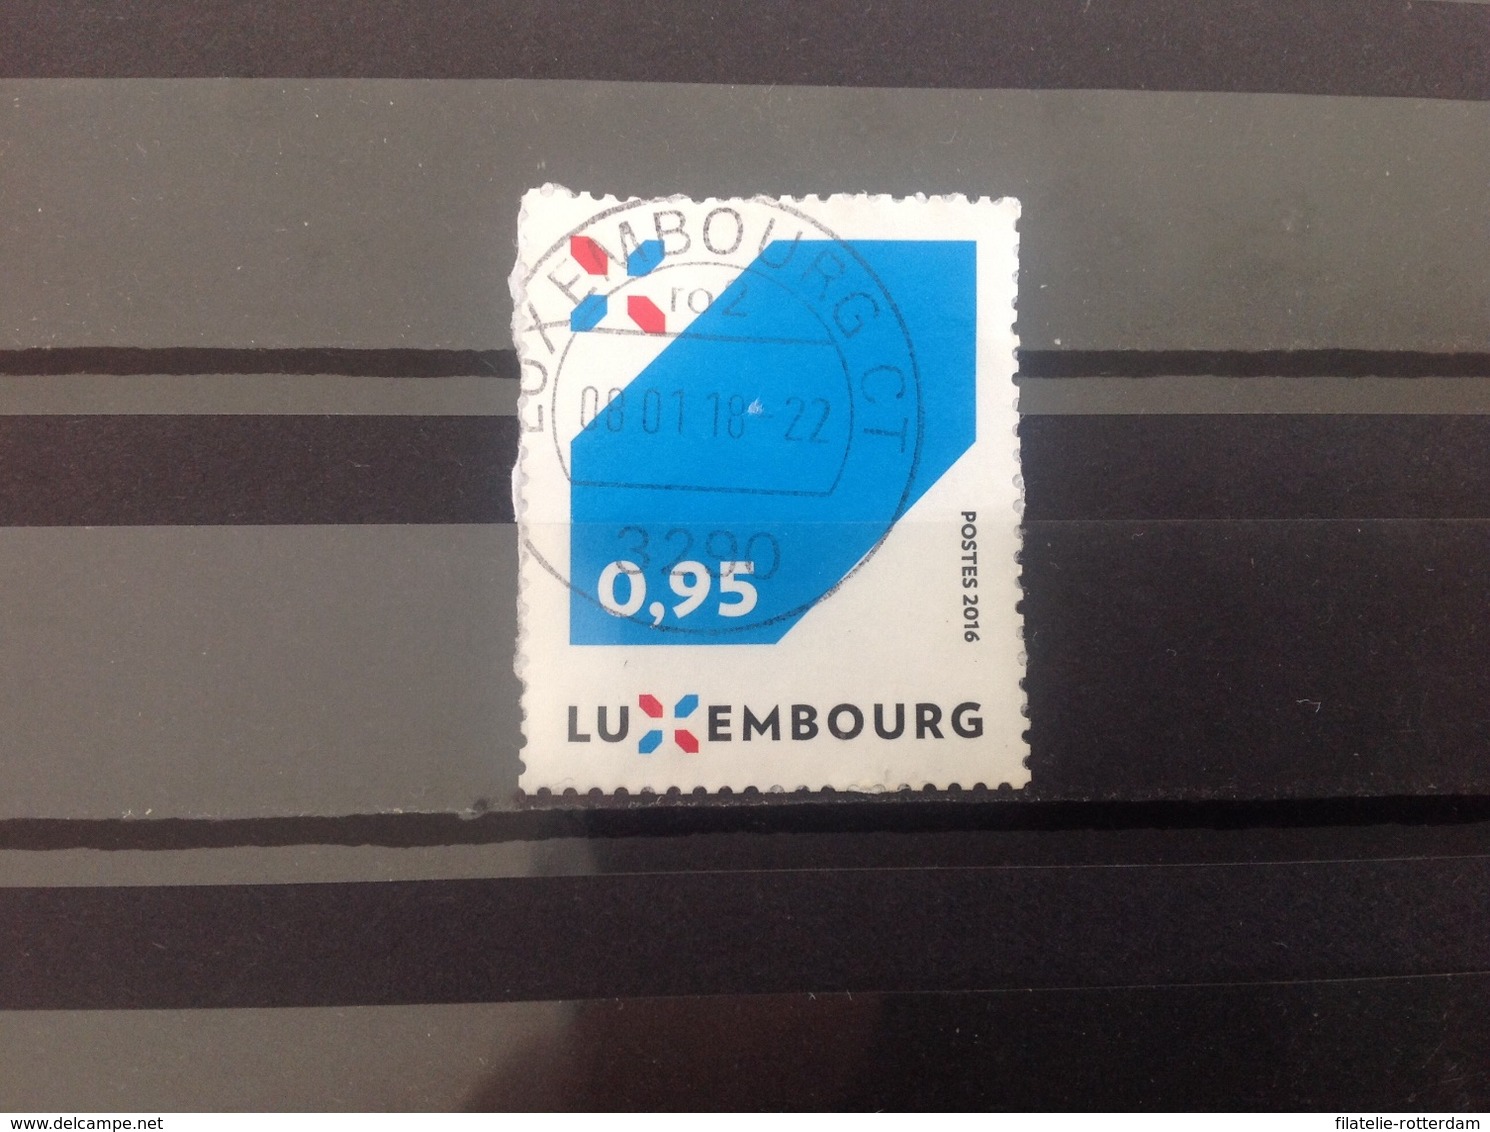 Luxemburg / Luxembourg - Handtekening Van Luxemburg (0.95) 2016 - Usati